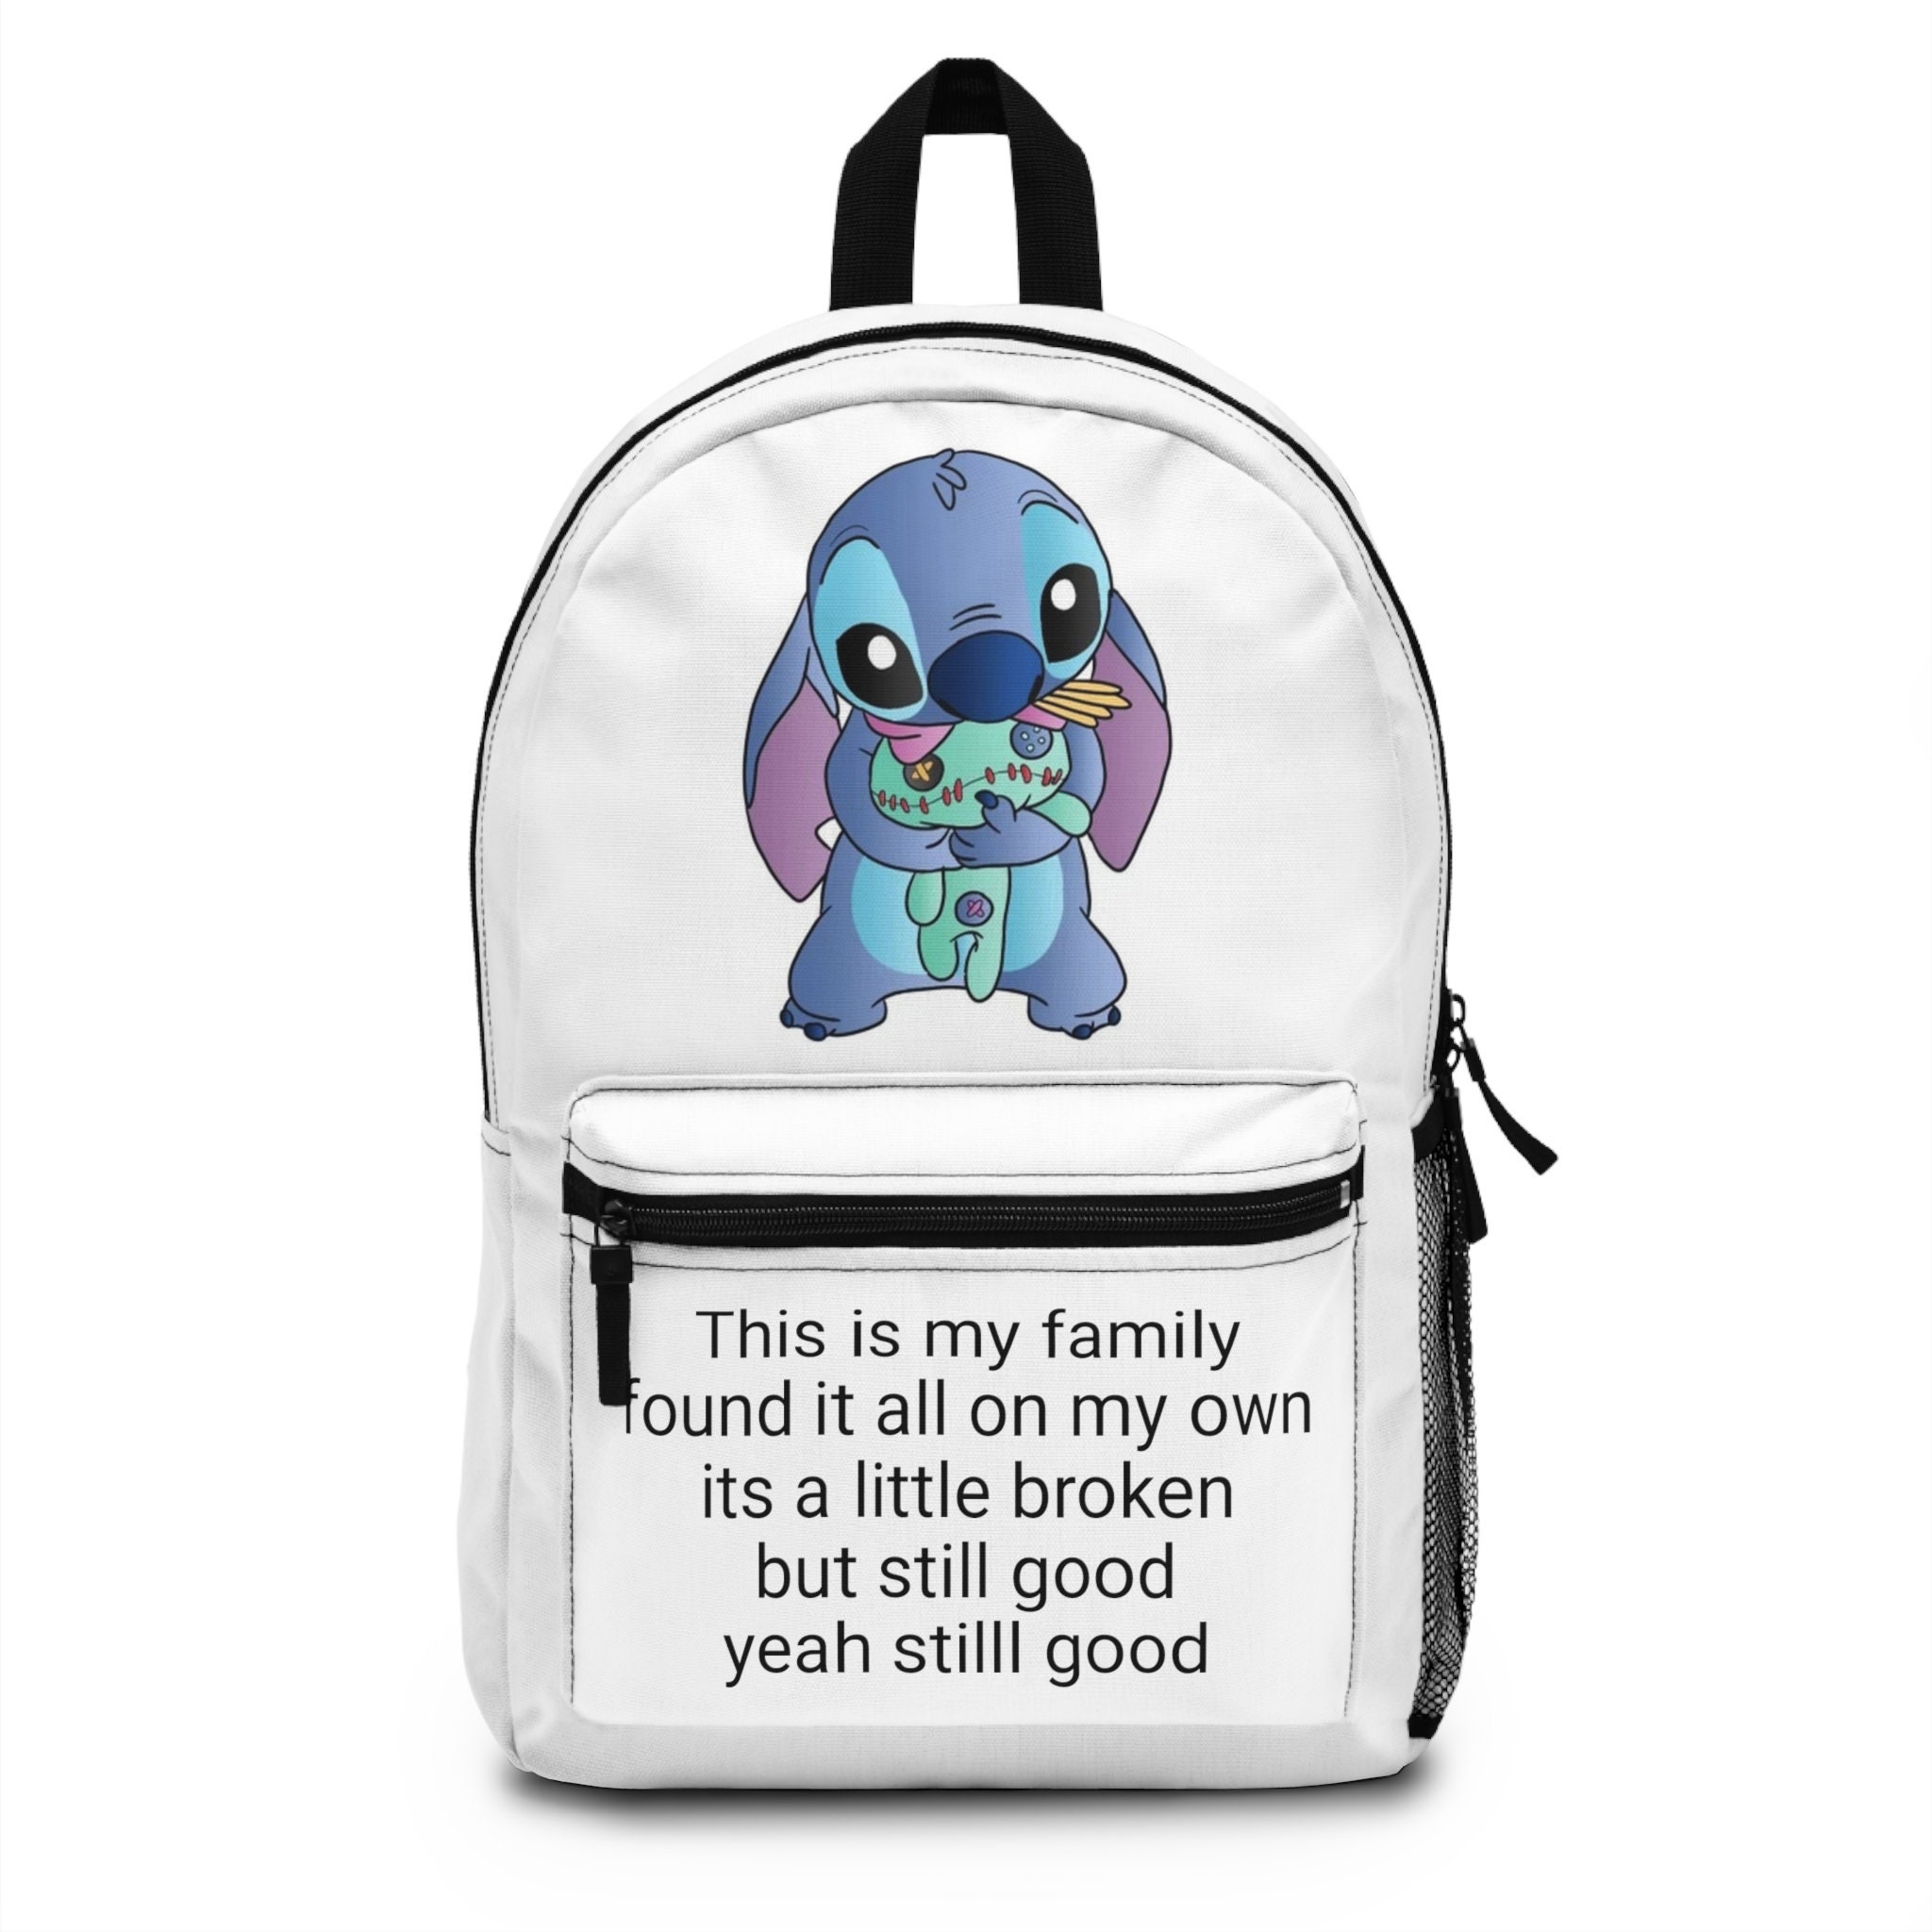 Stitch School Backpack – My School Bags